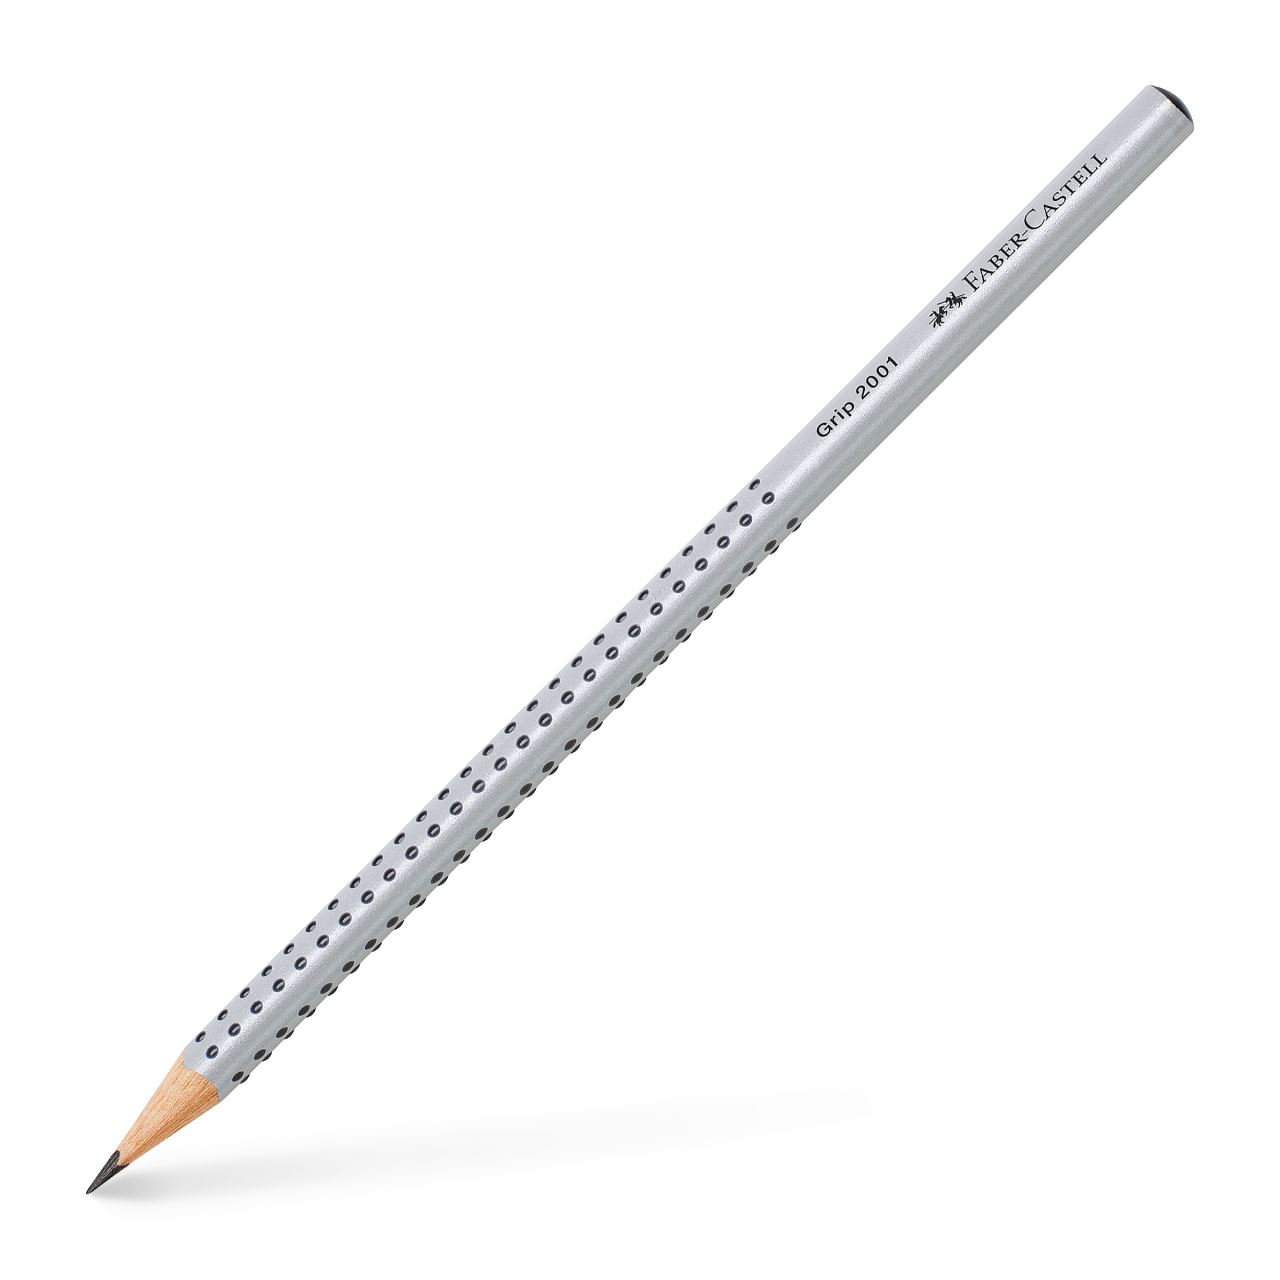 Faber-Castell - Grip 2001 graphite pencil, B, silver